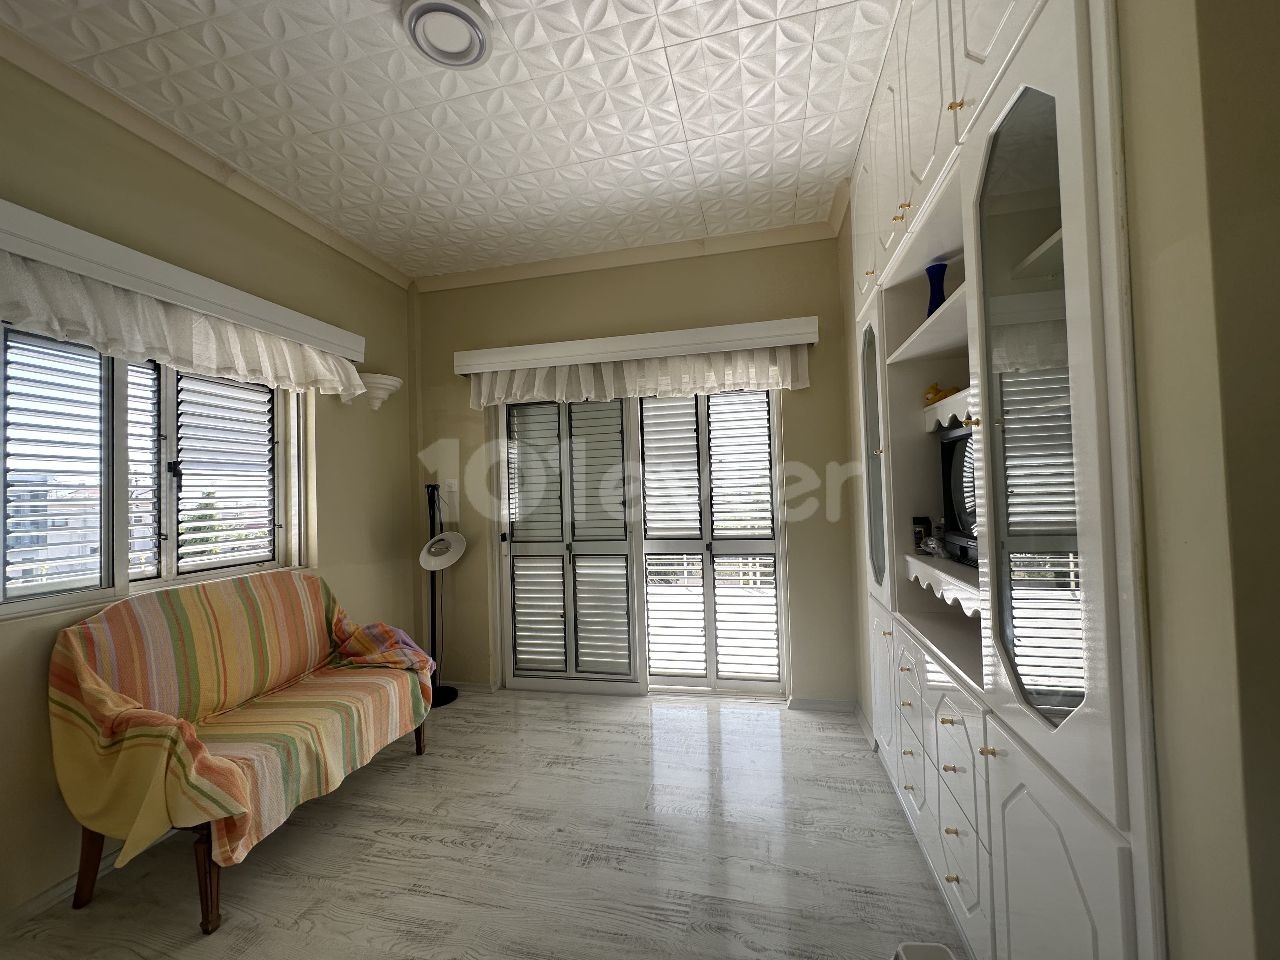 6 Bedroom Villa with Pool for Sale in Tuzla Region